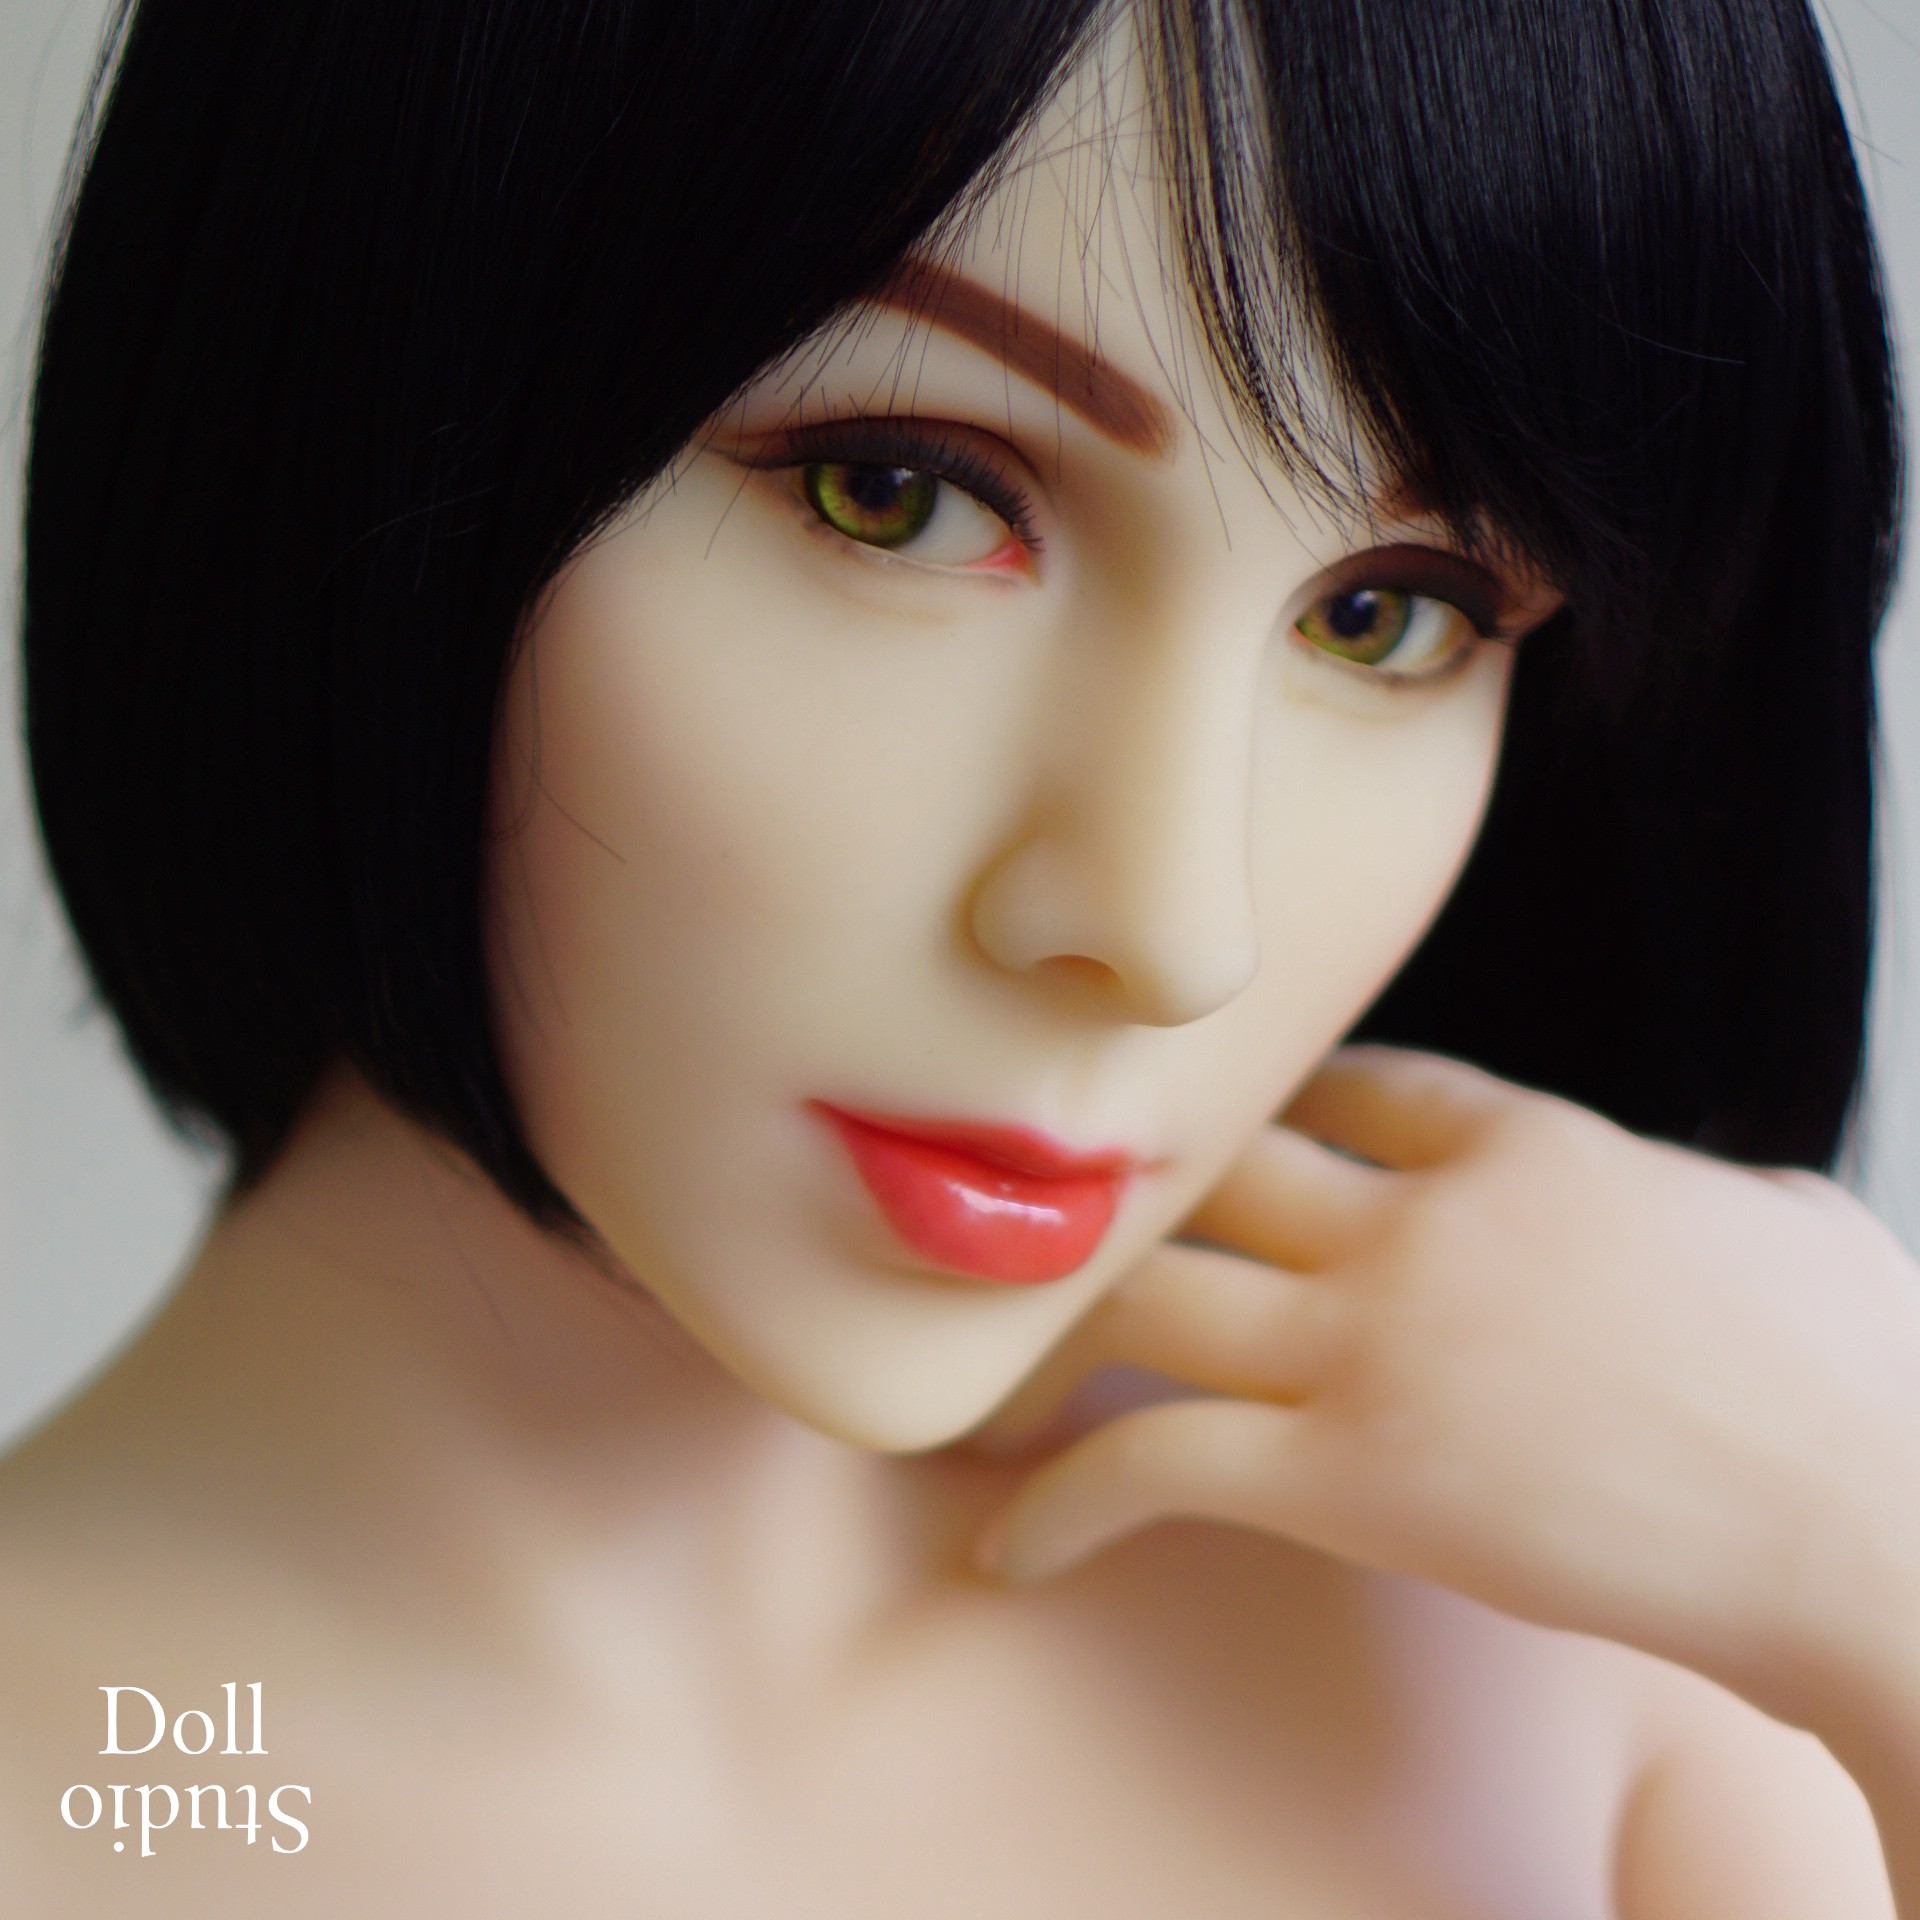 All Sino-doll heads - Forum | Dollbase